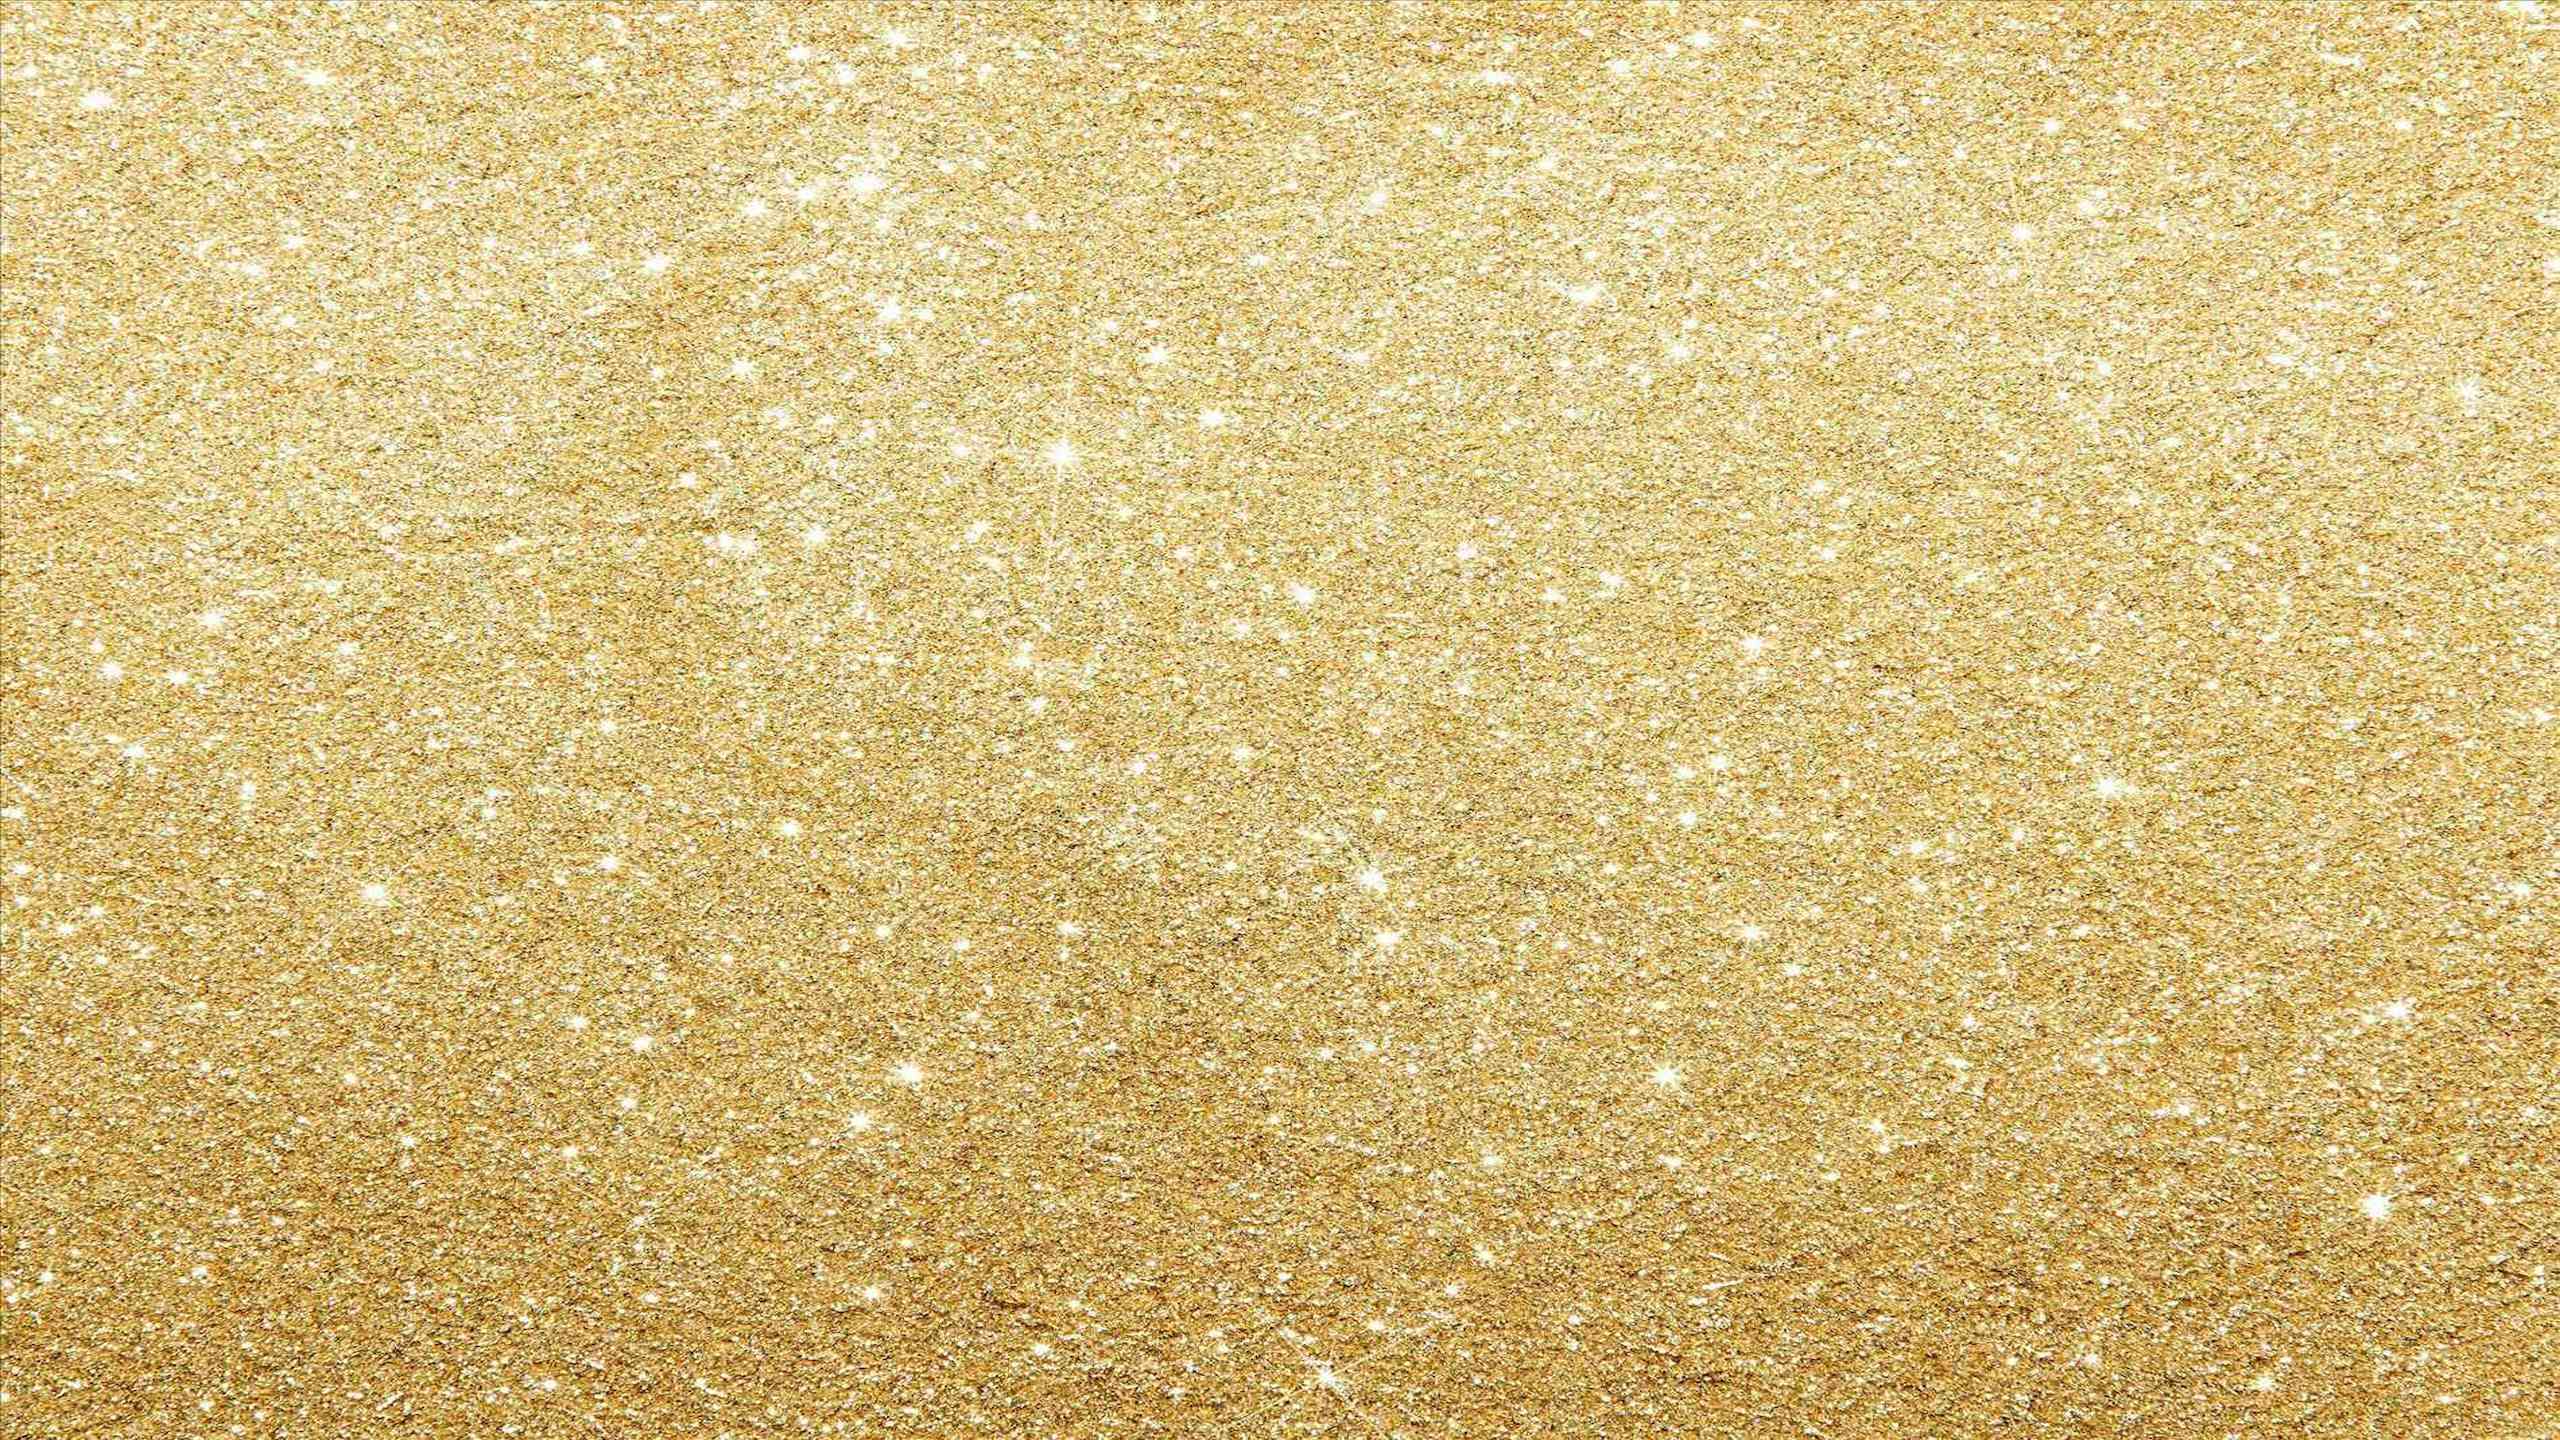 2560x1440 Long lanh Rose Gold Glitter Tumblr Background Gold Wallpaper